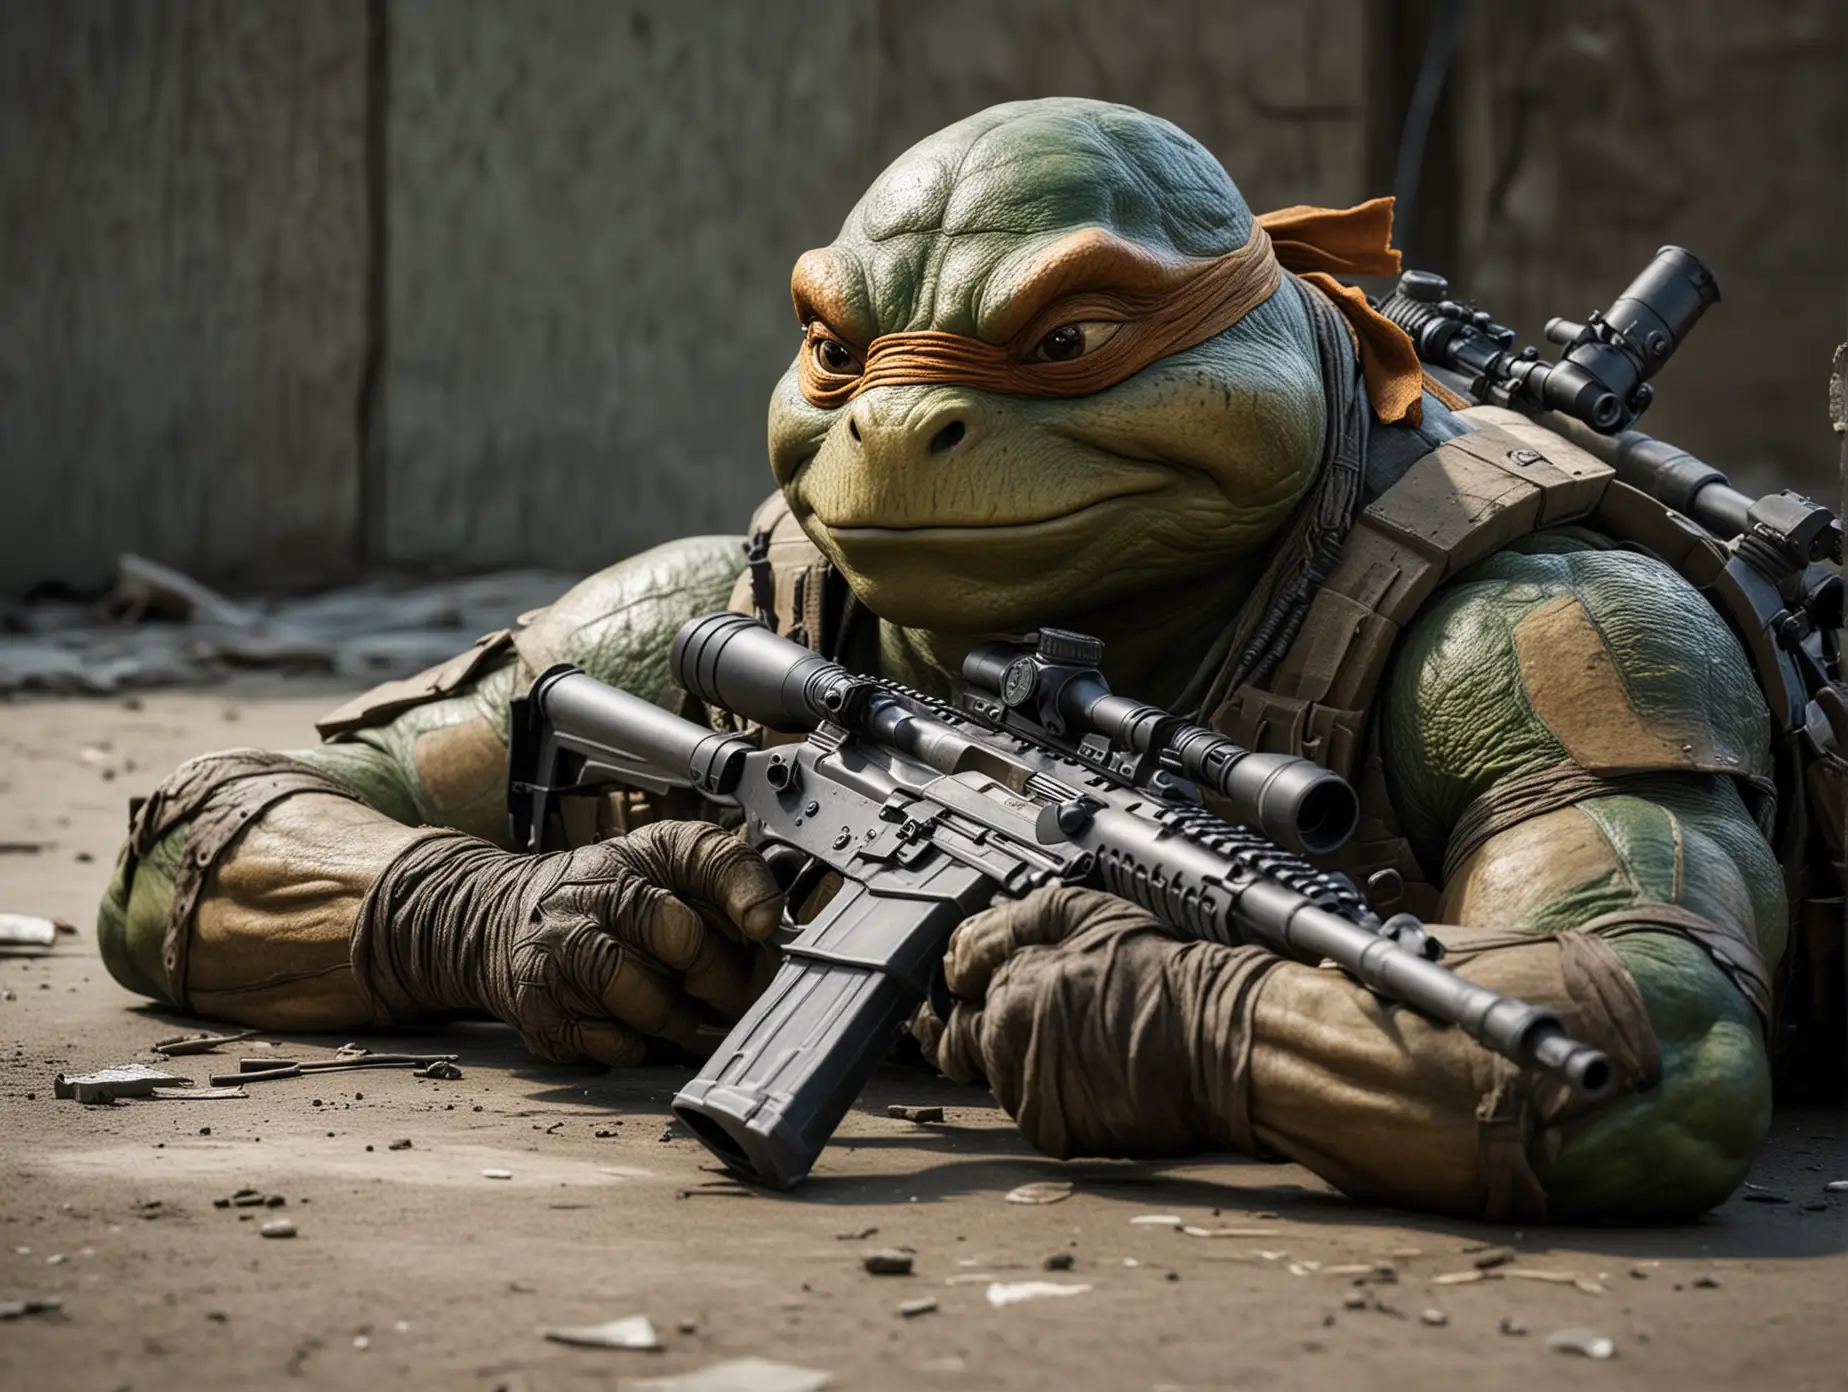 Ninja Turtle Leonardo in Stealth Mode with Sniper Rifle